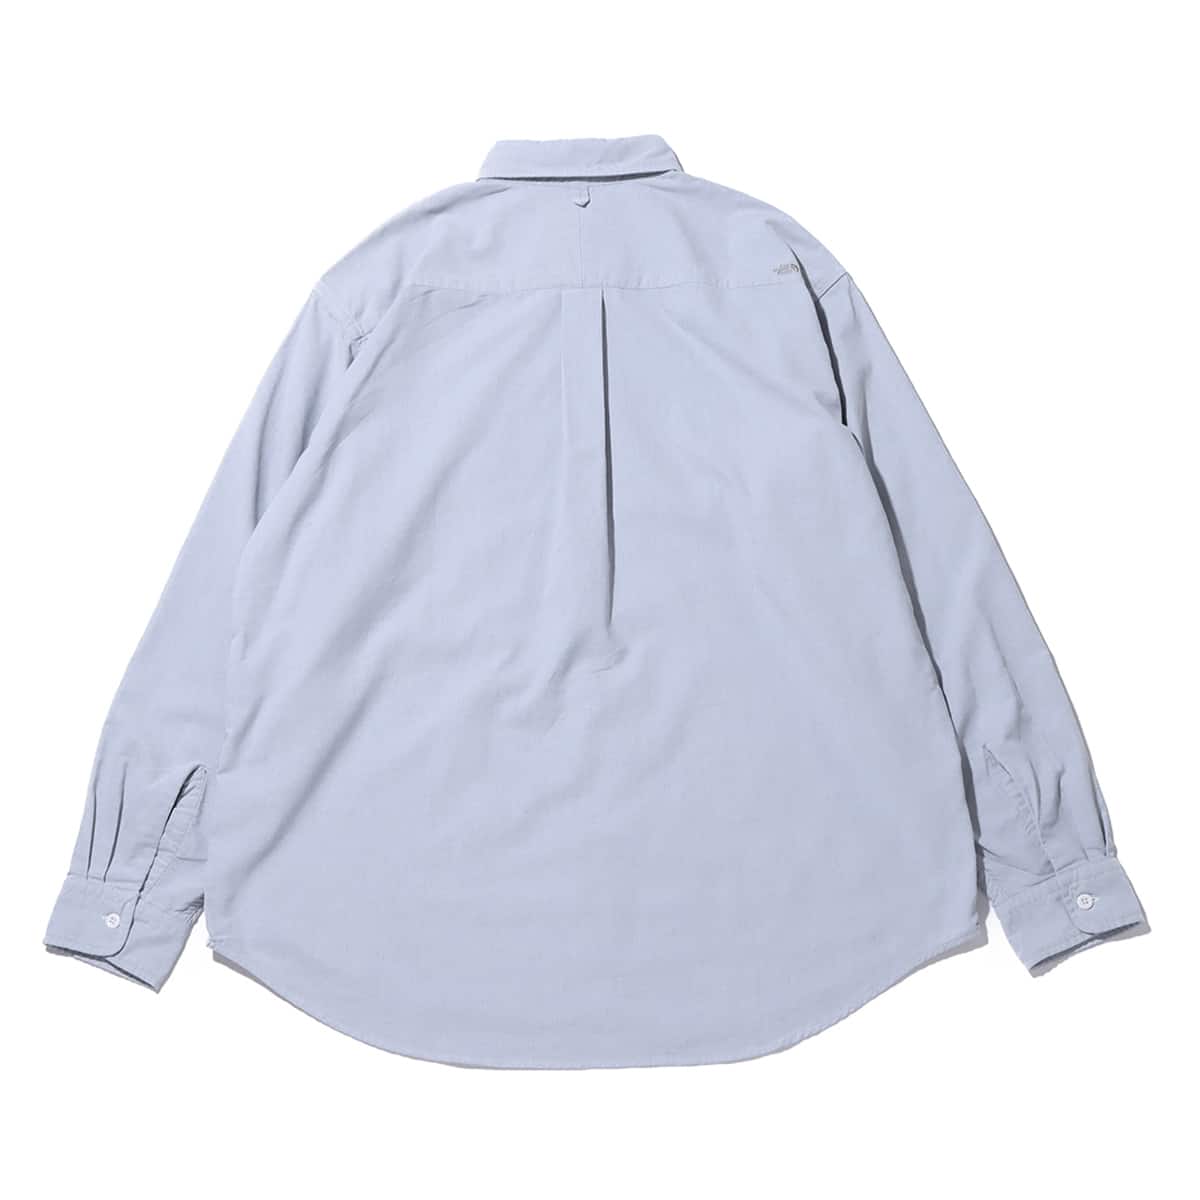 THE NORTH FACE PURPLE LABEL Button Down Field Shirt Asphalt Gray